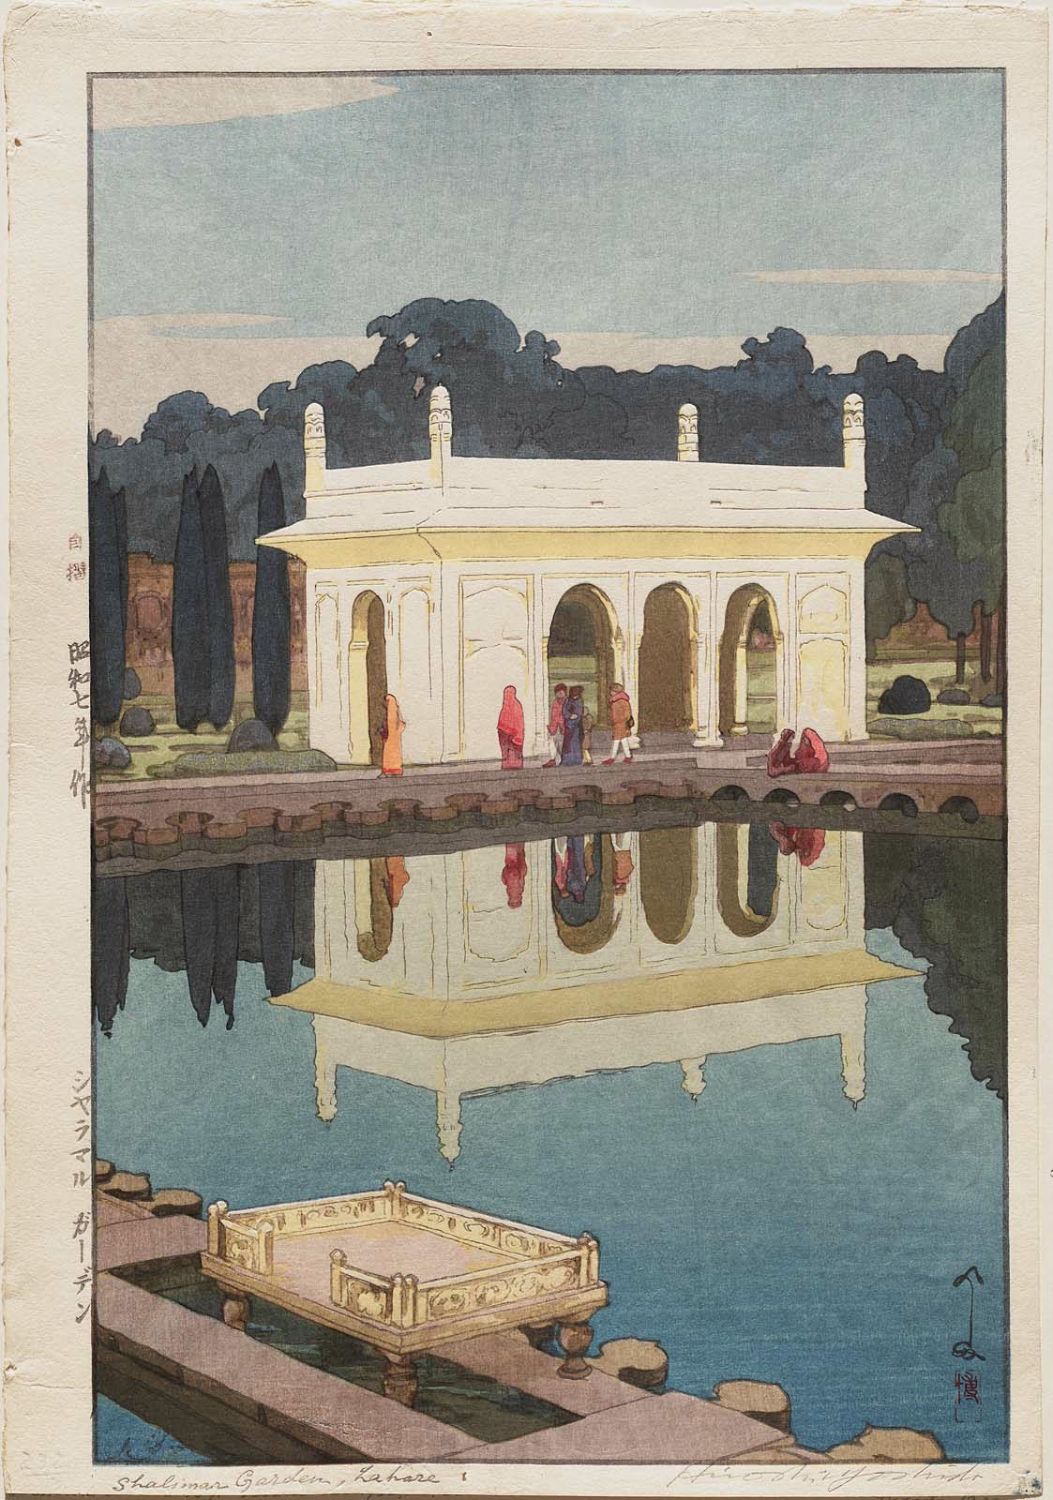 Hiroshi Yoshida - Shalimar Garden, Lahore (Sharamaru Gaaden)